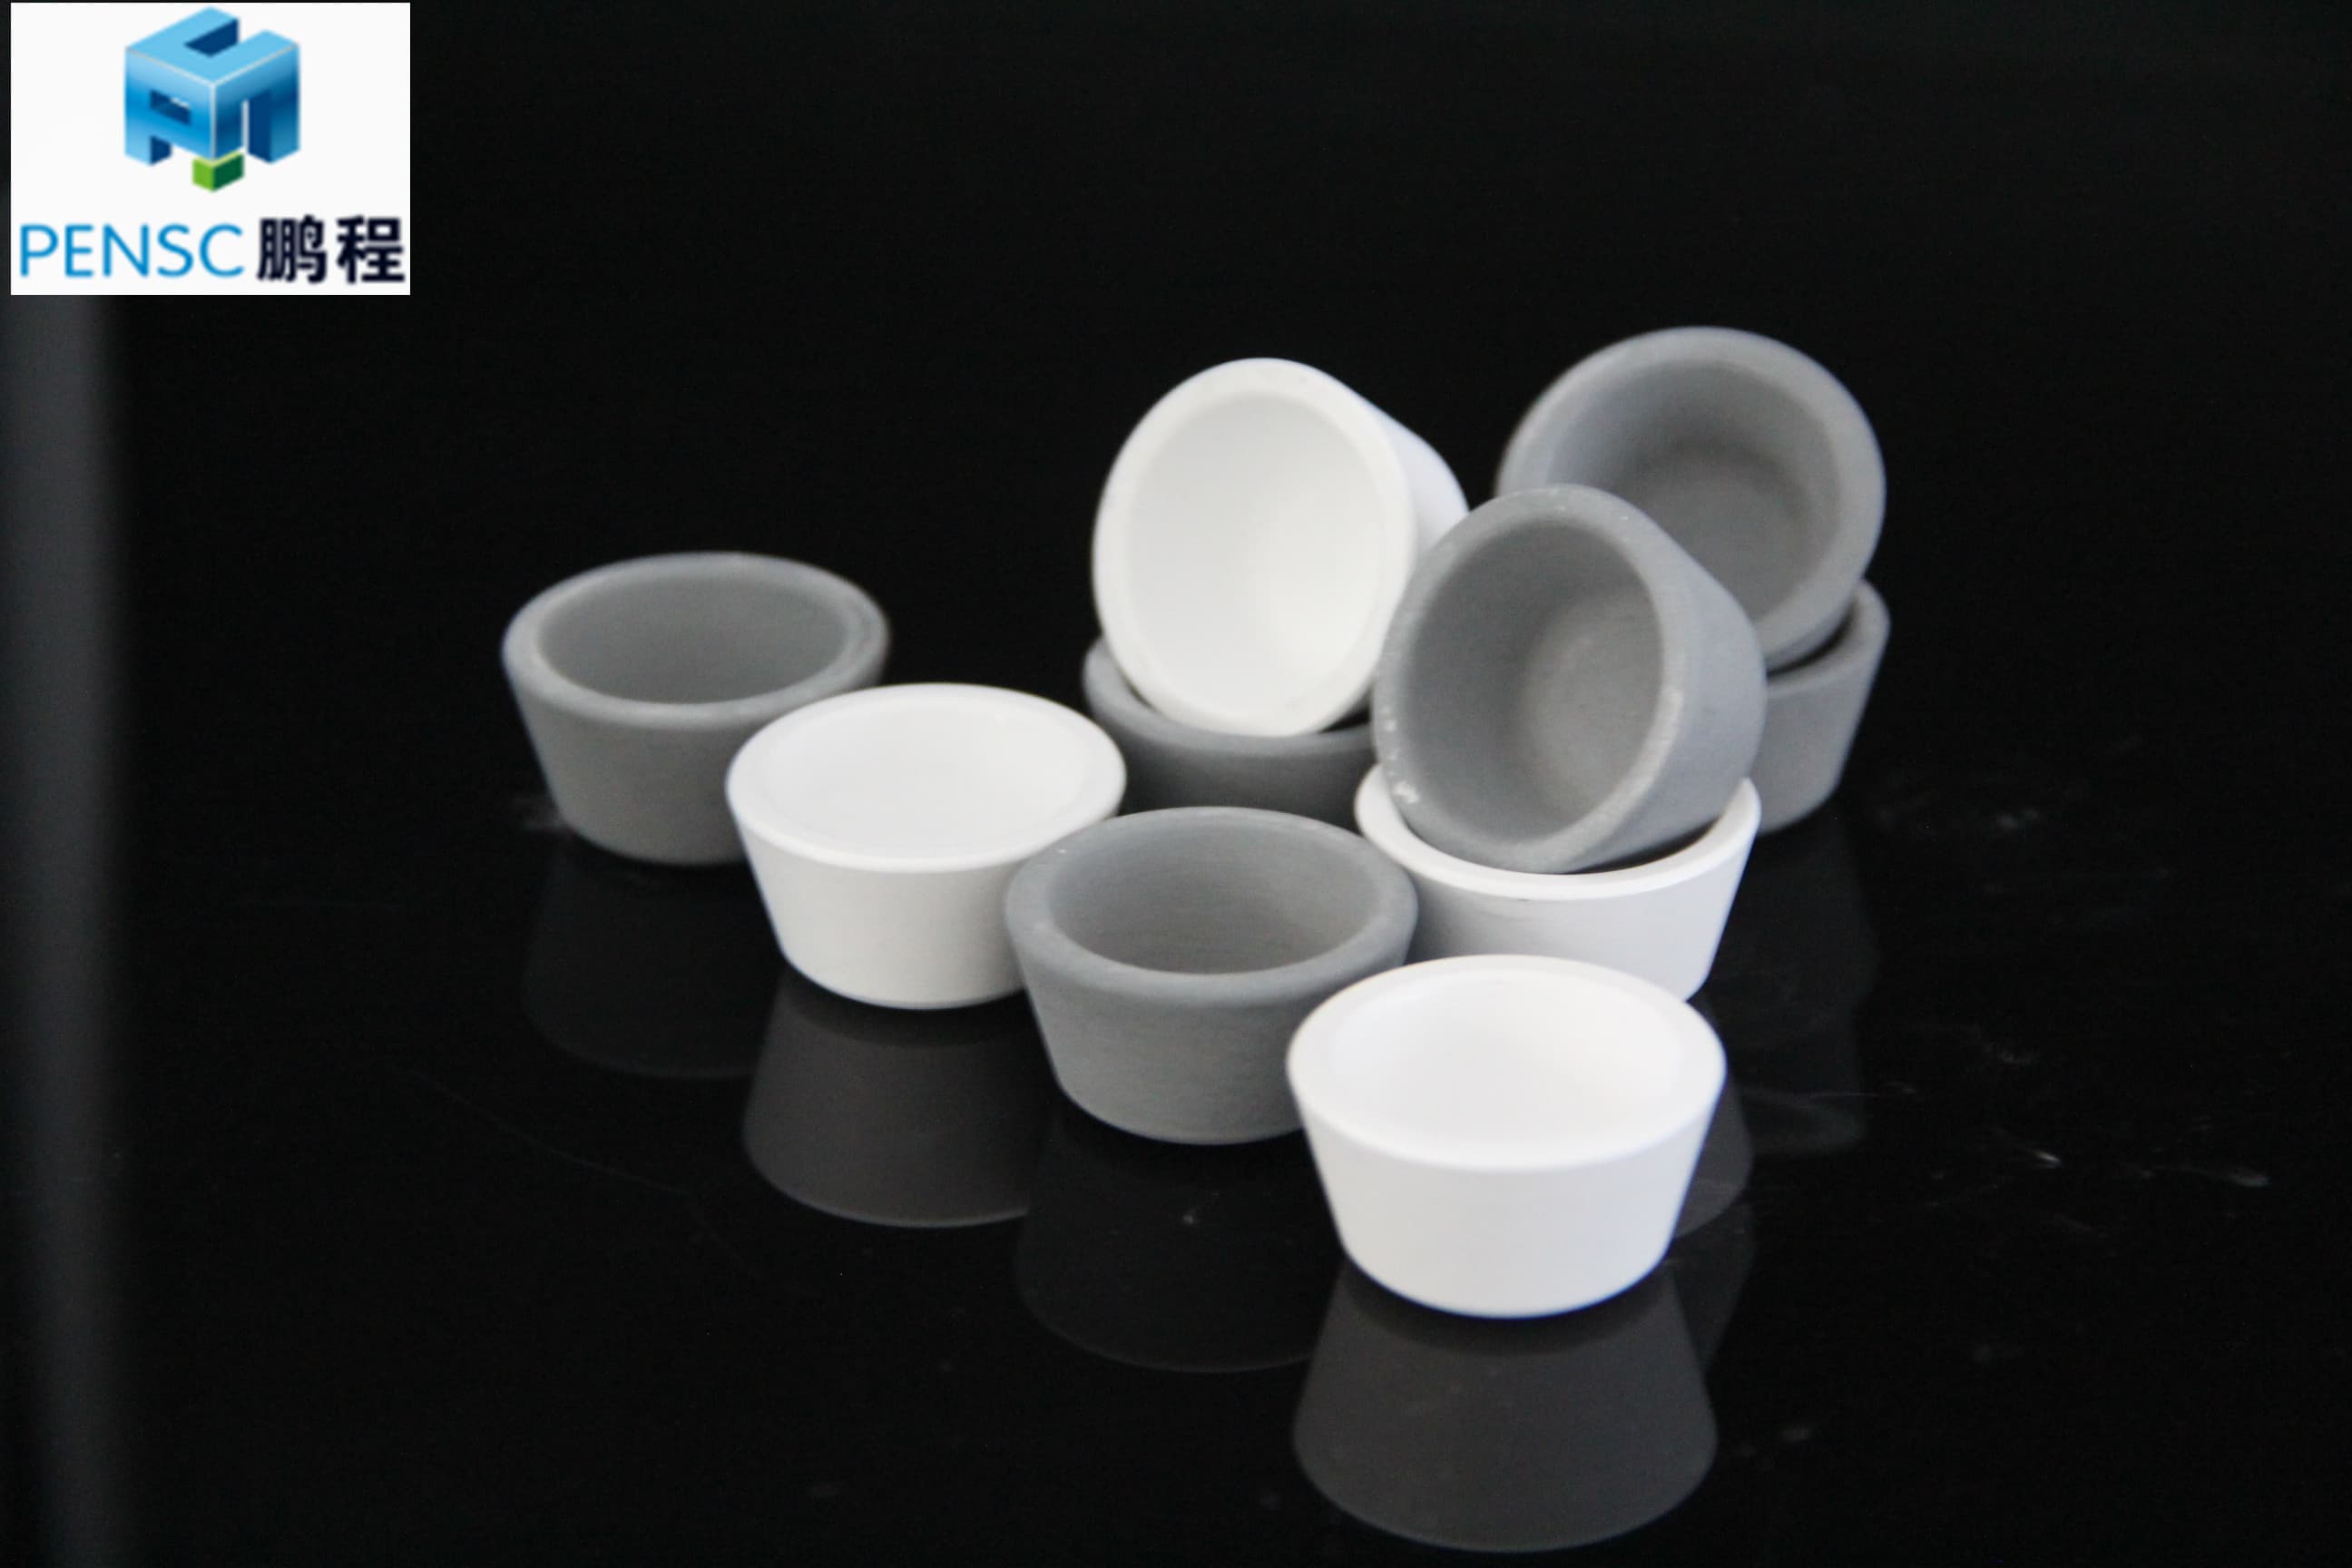 Boron nitride ceramic crucible for melting metal